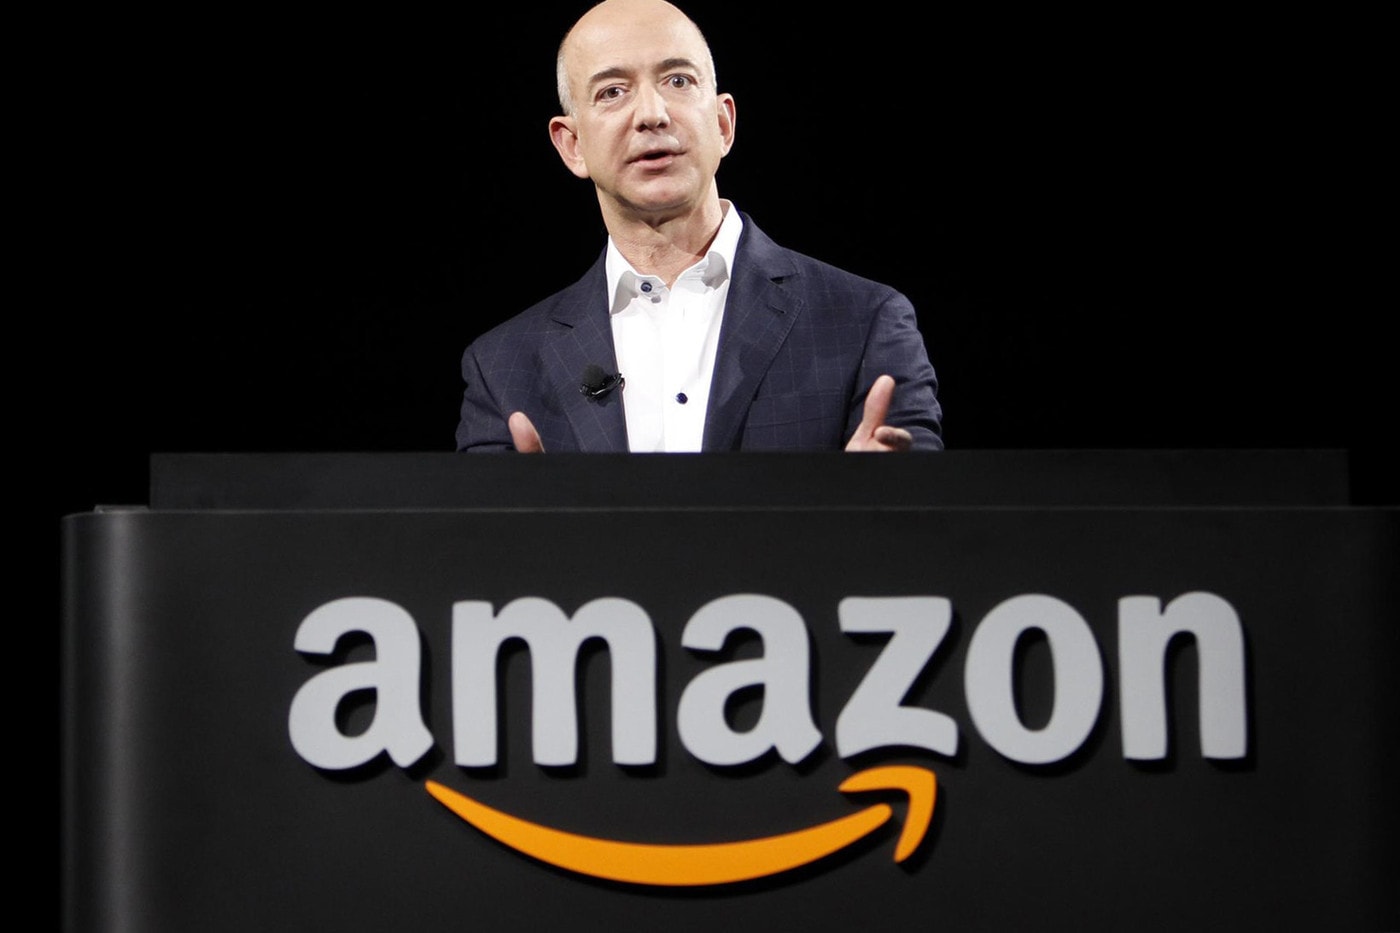 Amazon Jeff Bezos Apple Stock Market Valuation $1 Trillion USD One Dollar Price Worth Share Profit business tech